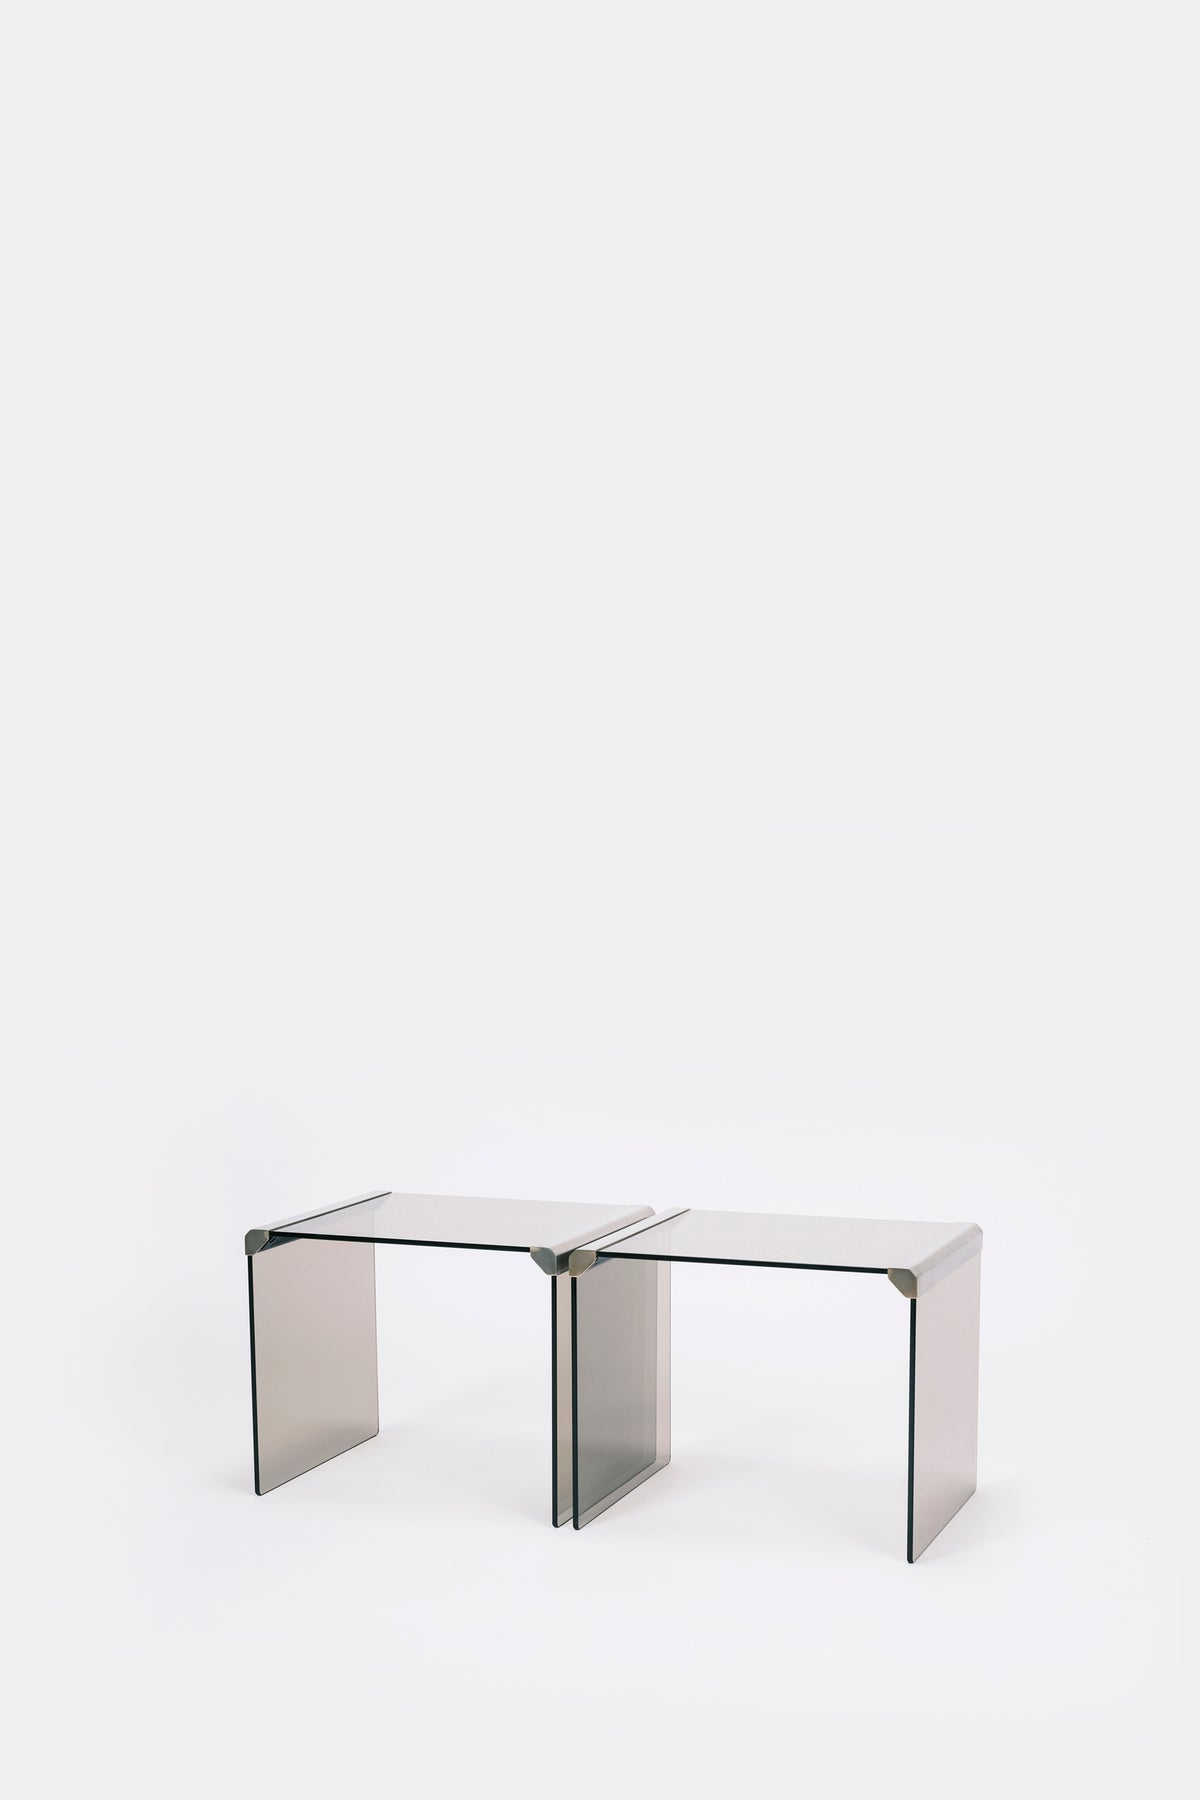 Pair of glass tables Pierangelo Galotti 70s